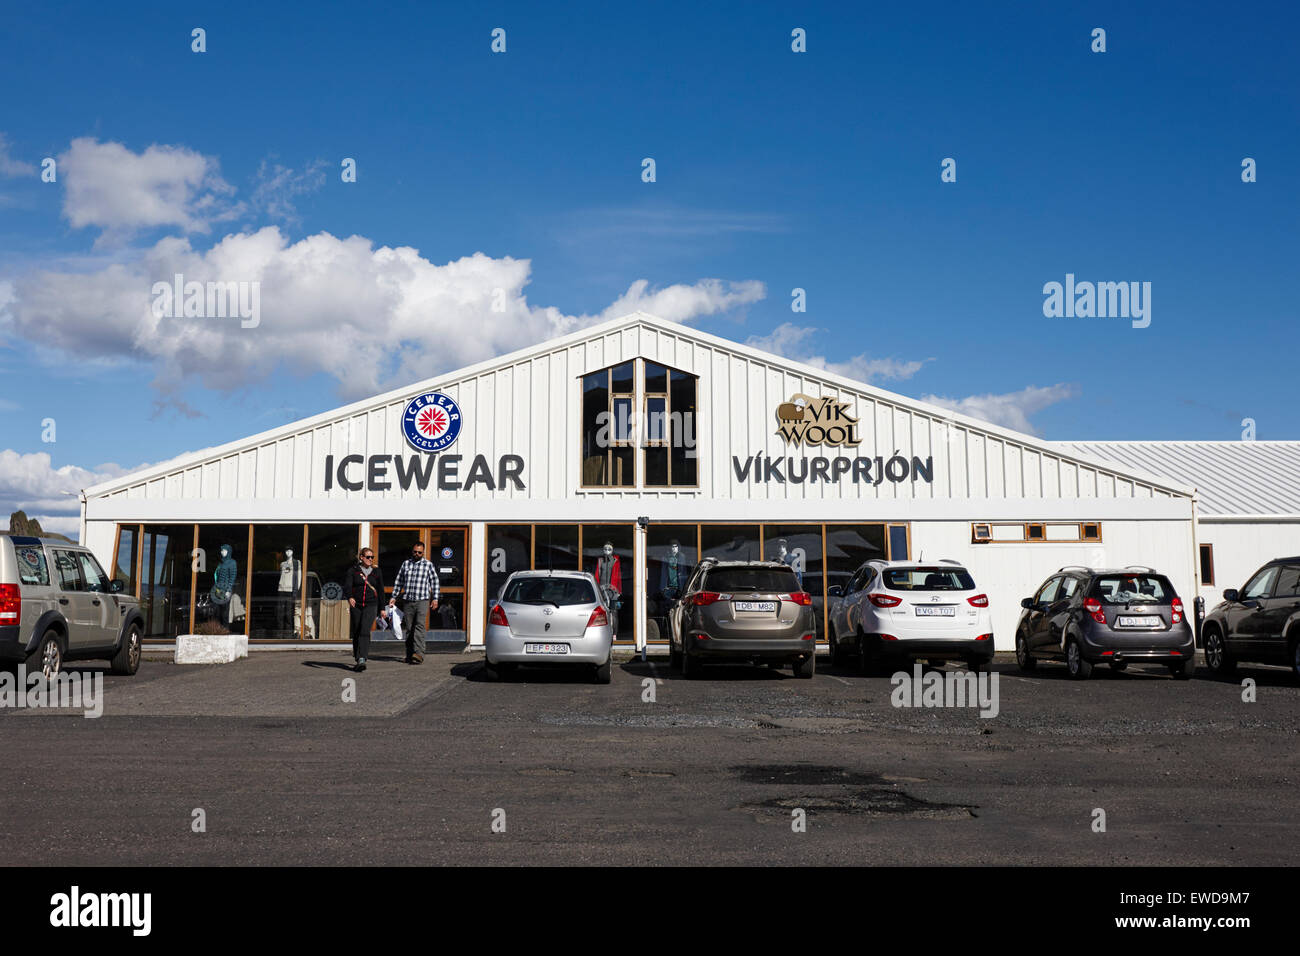 vik wool and icewear store Vik i Myrdal Iceland Stock Photo